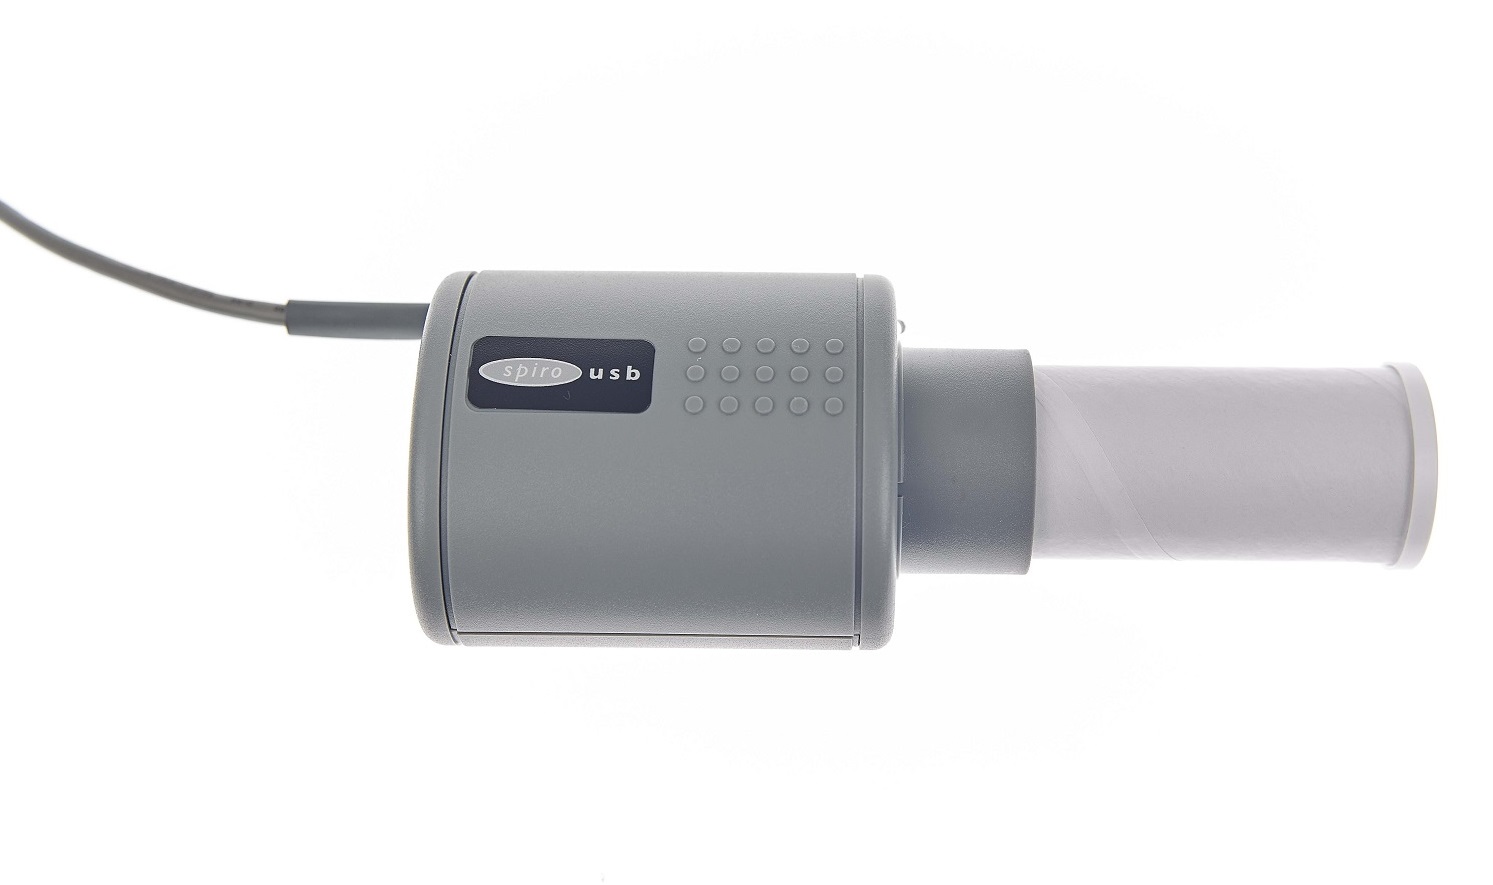 Vyaire - Espirómetro SPIRO USB